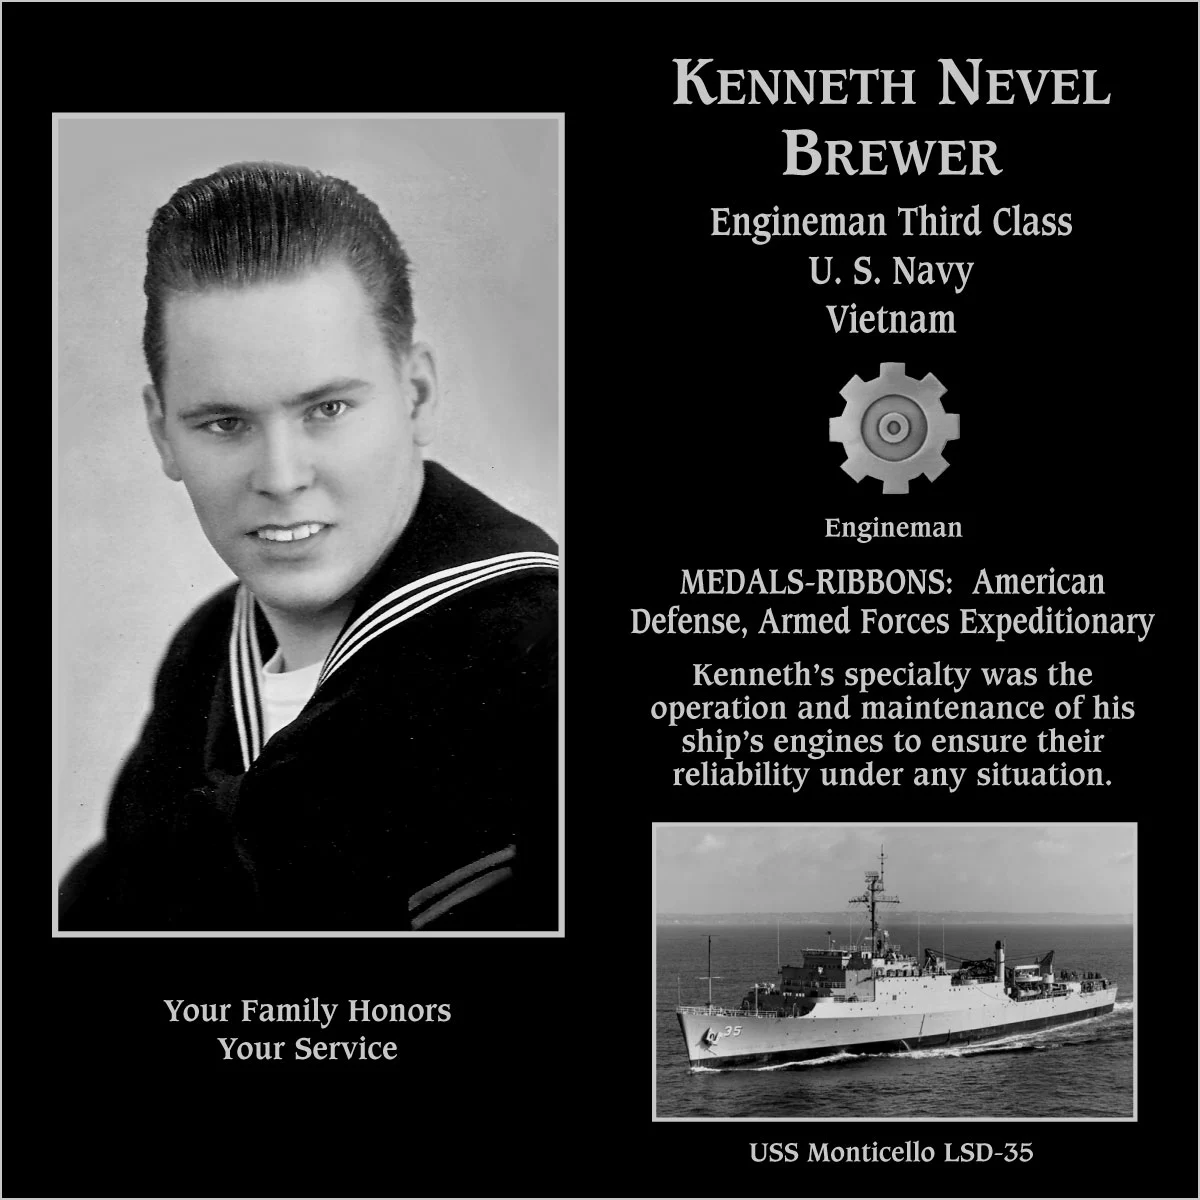 Kenneth Nevel Brewer